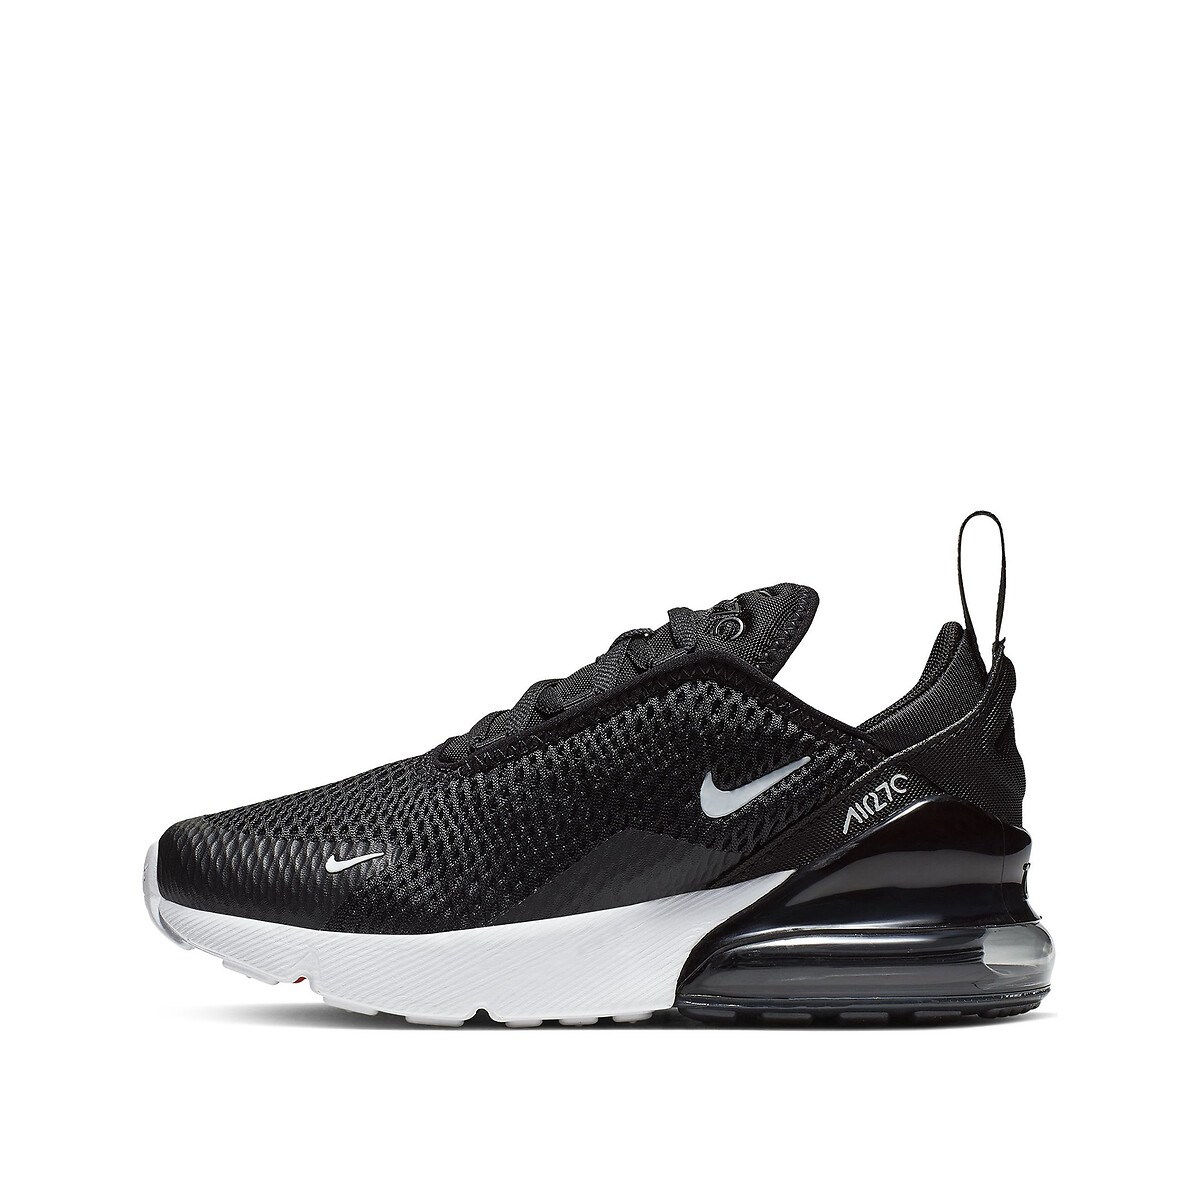 air max 270 zwart/wit Nike | La Redoute